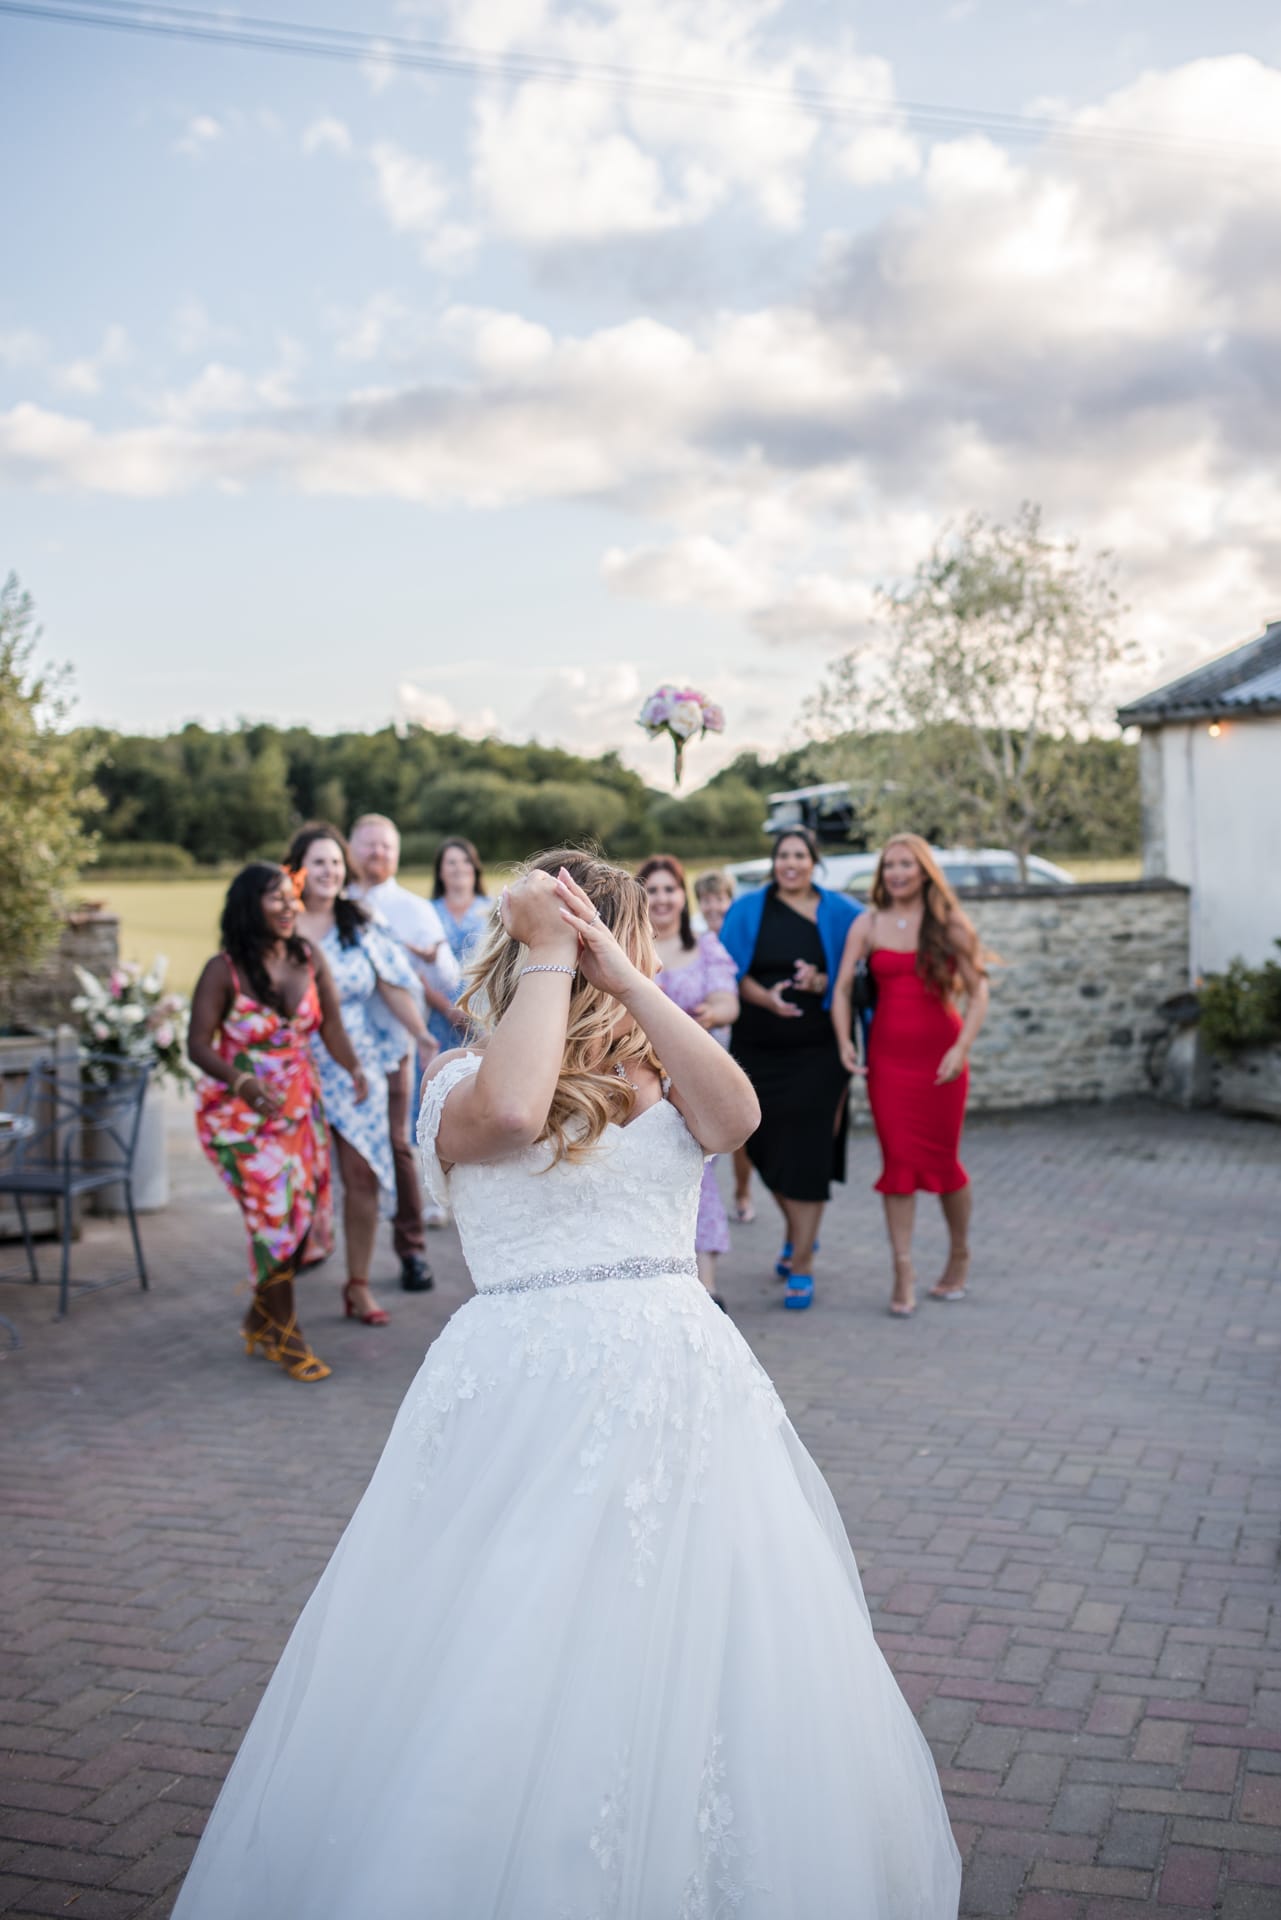 Bride throwing wedding bouquet to girls behind her